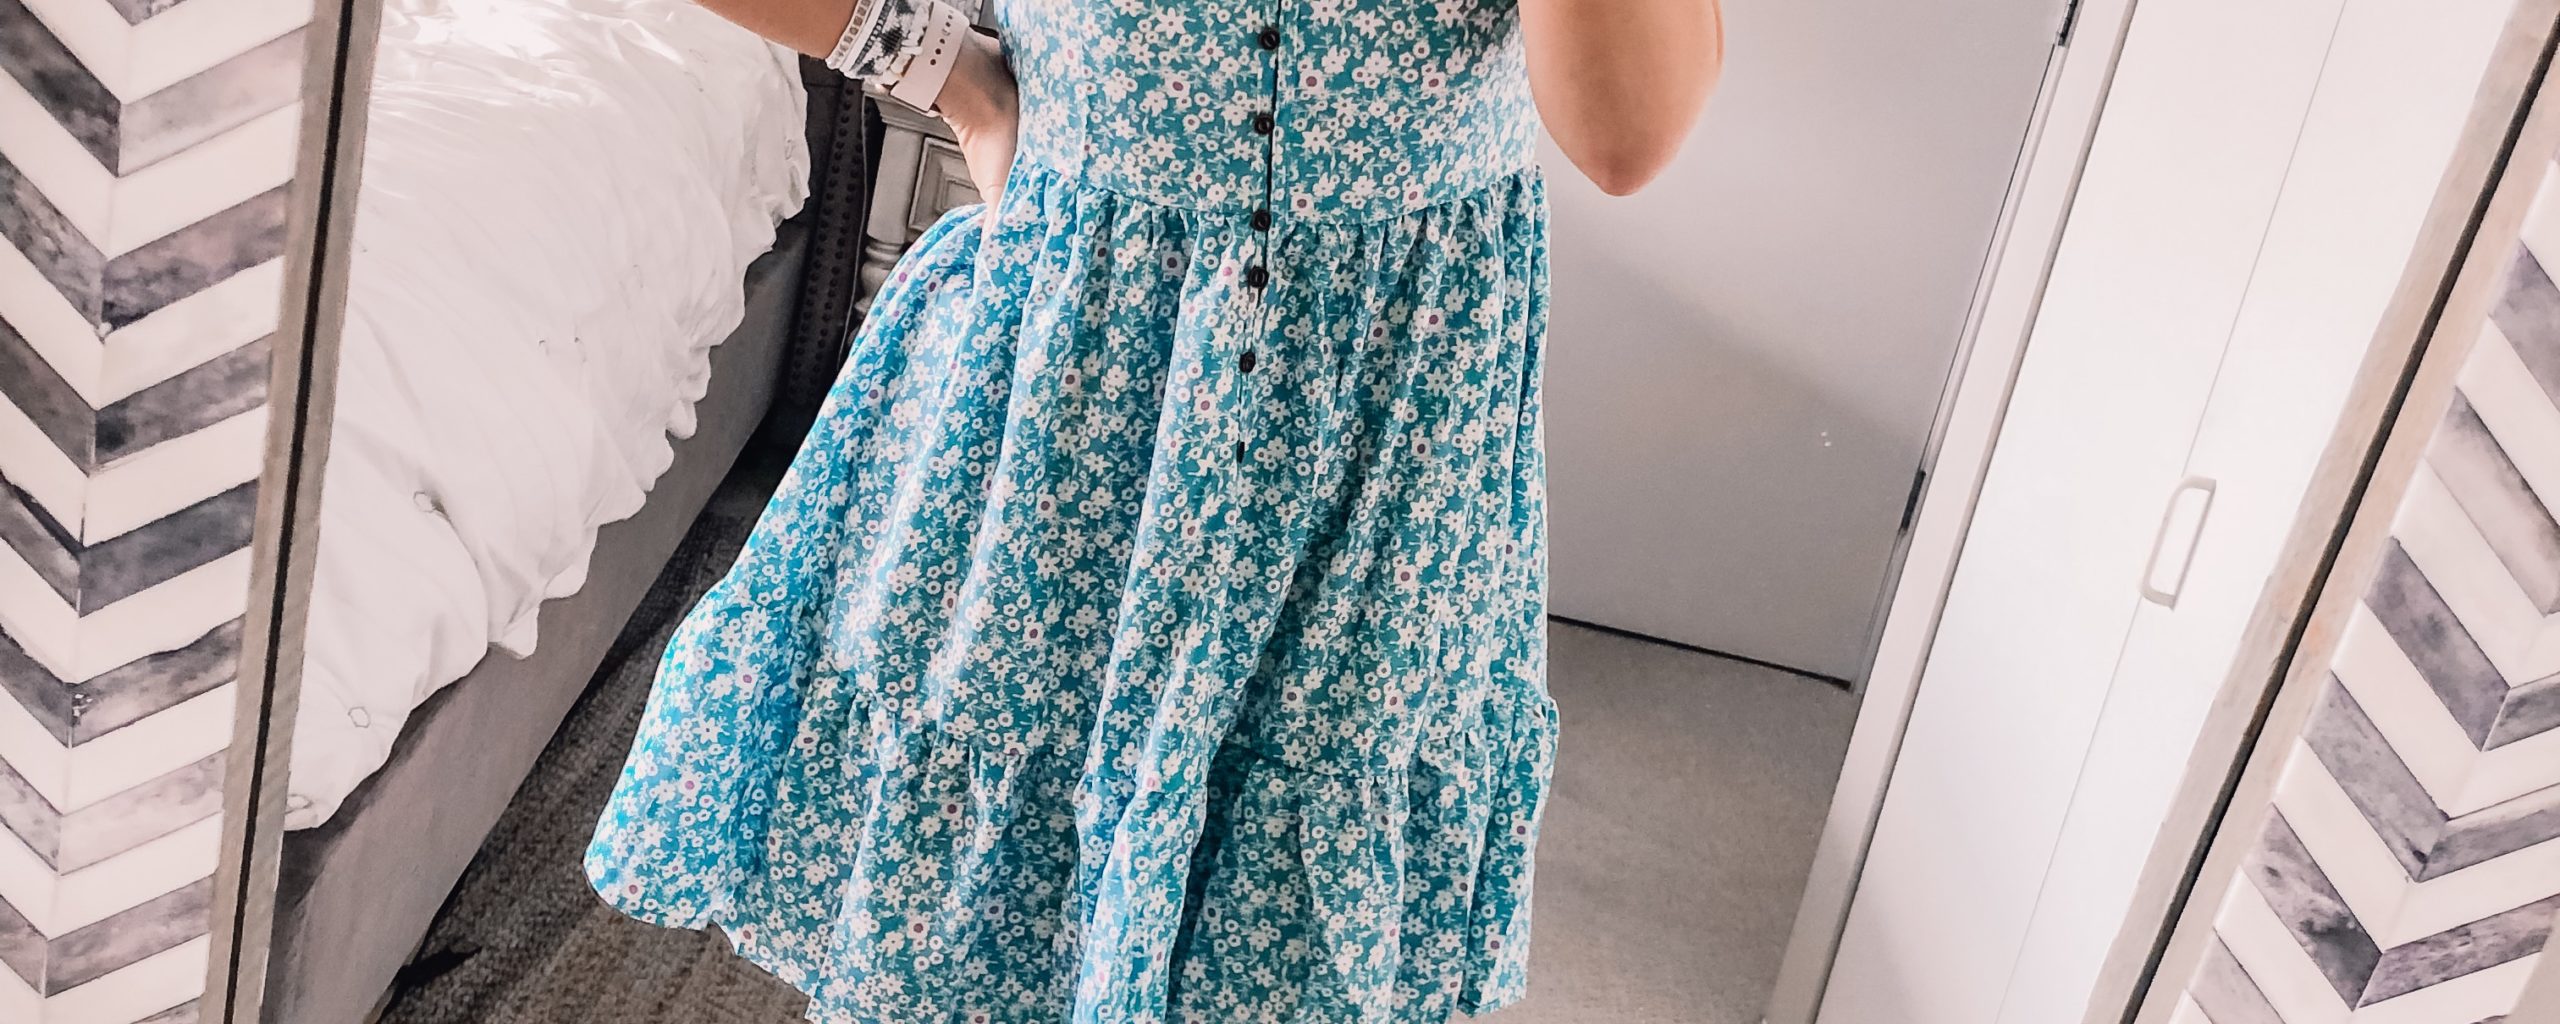 peplum dress from amazon